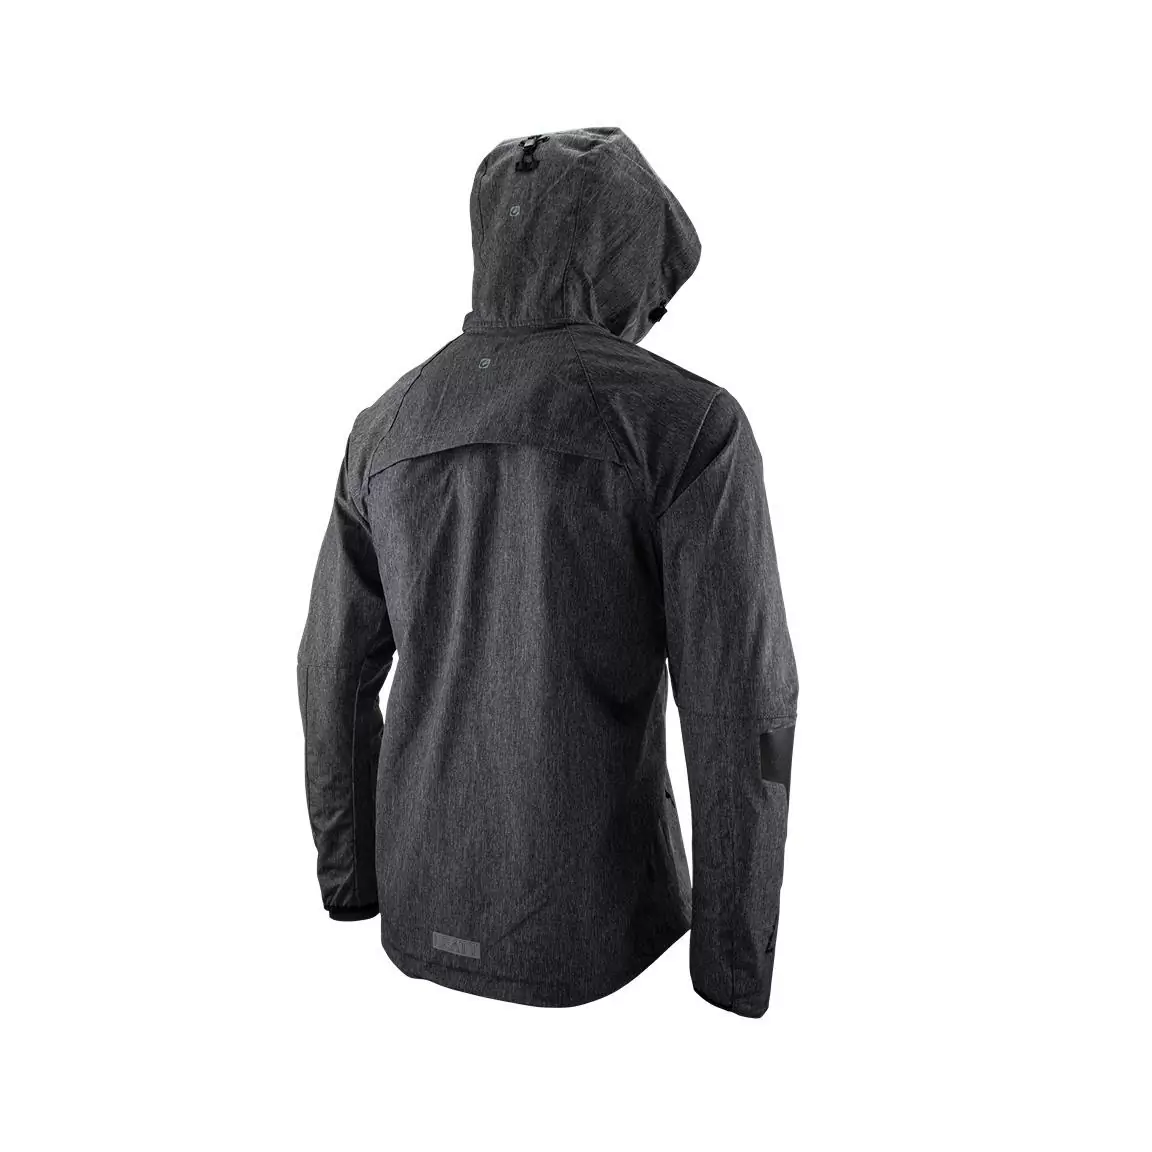 Mtb Hydradri 4.0 waterproof jacket Black size S #3